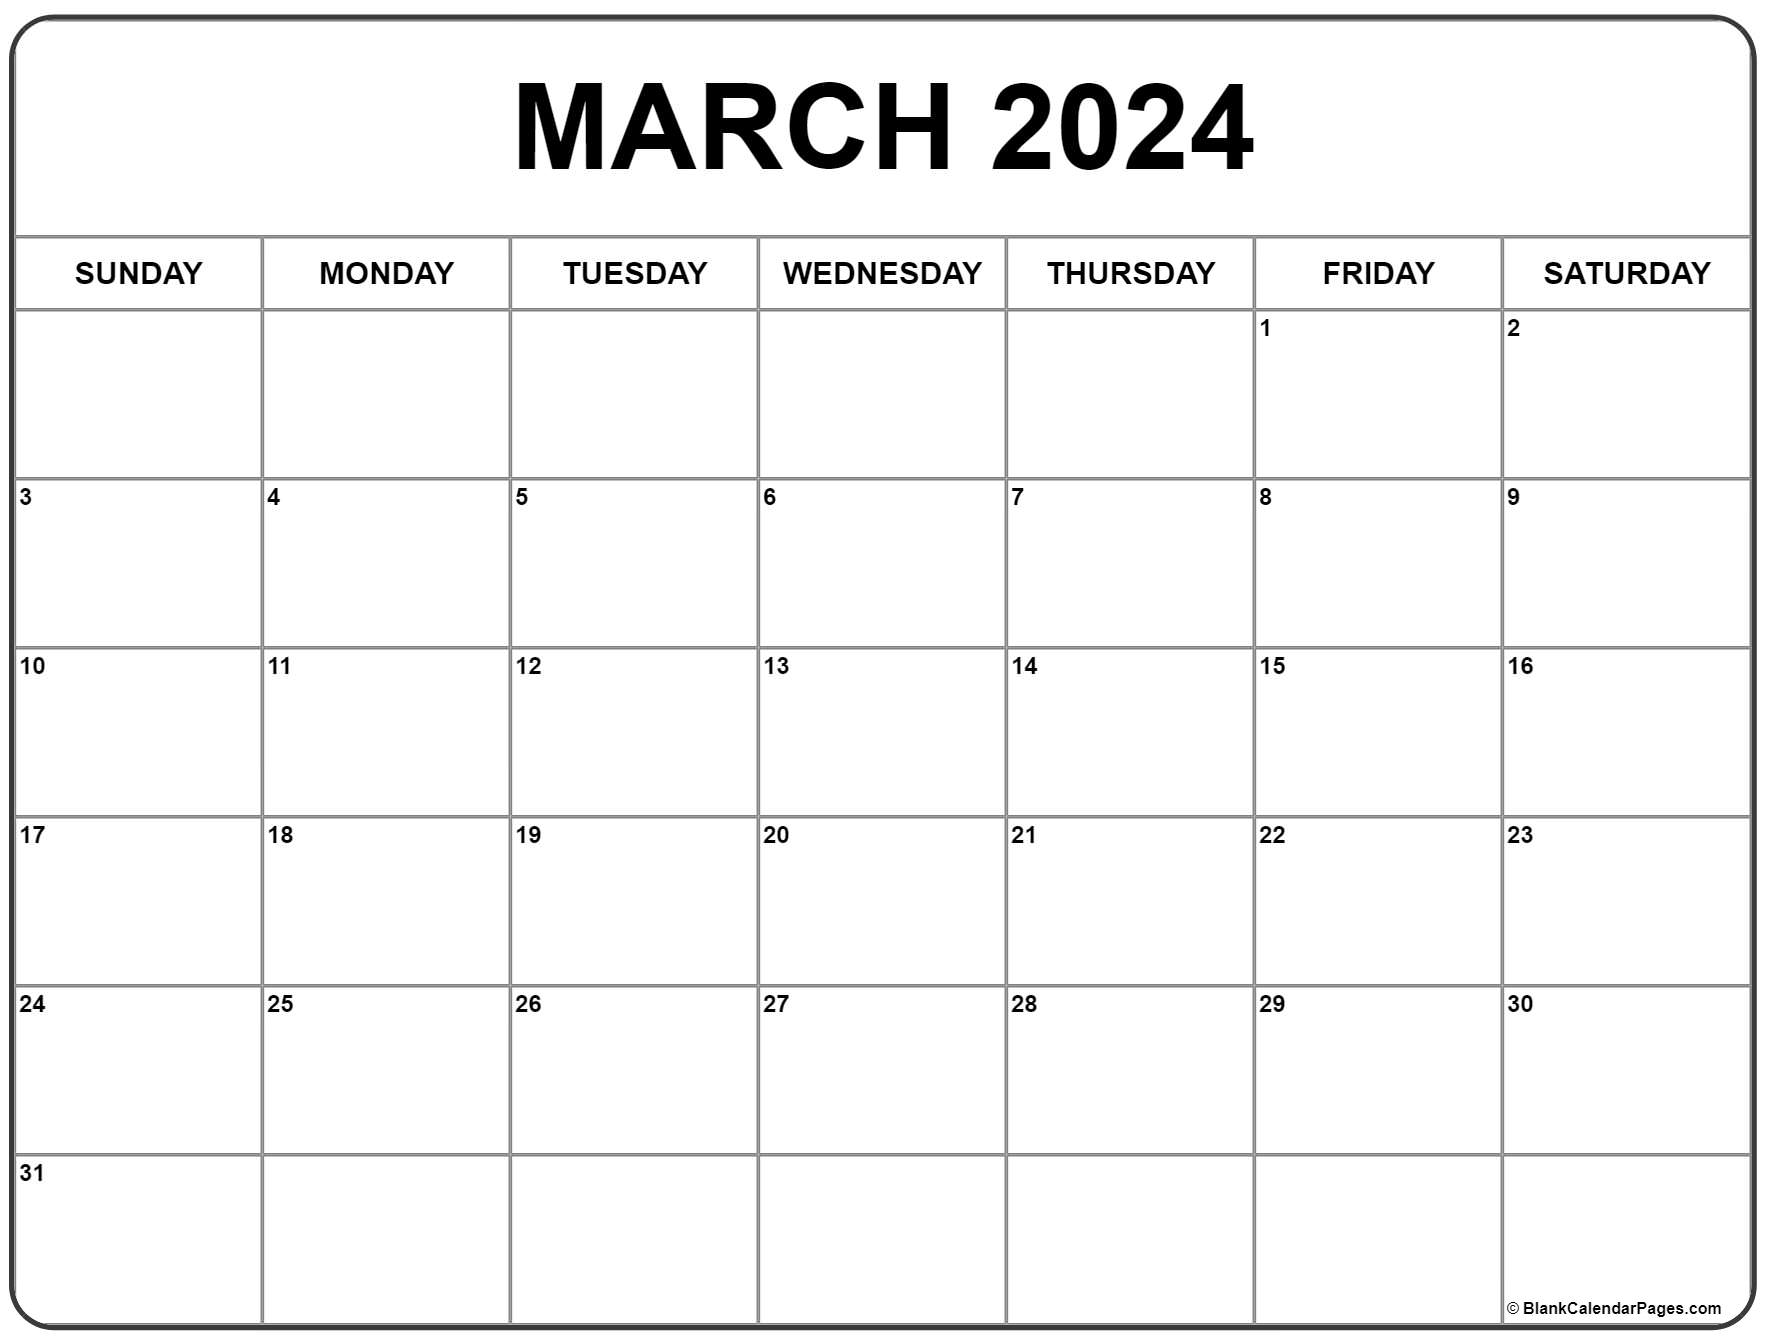 March 2024 Calendar | Free Printable Calendar for Printable Calendar March 2024